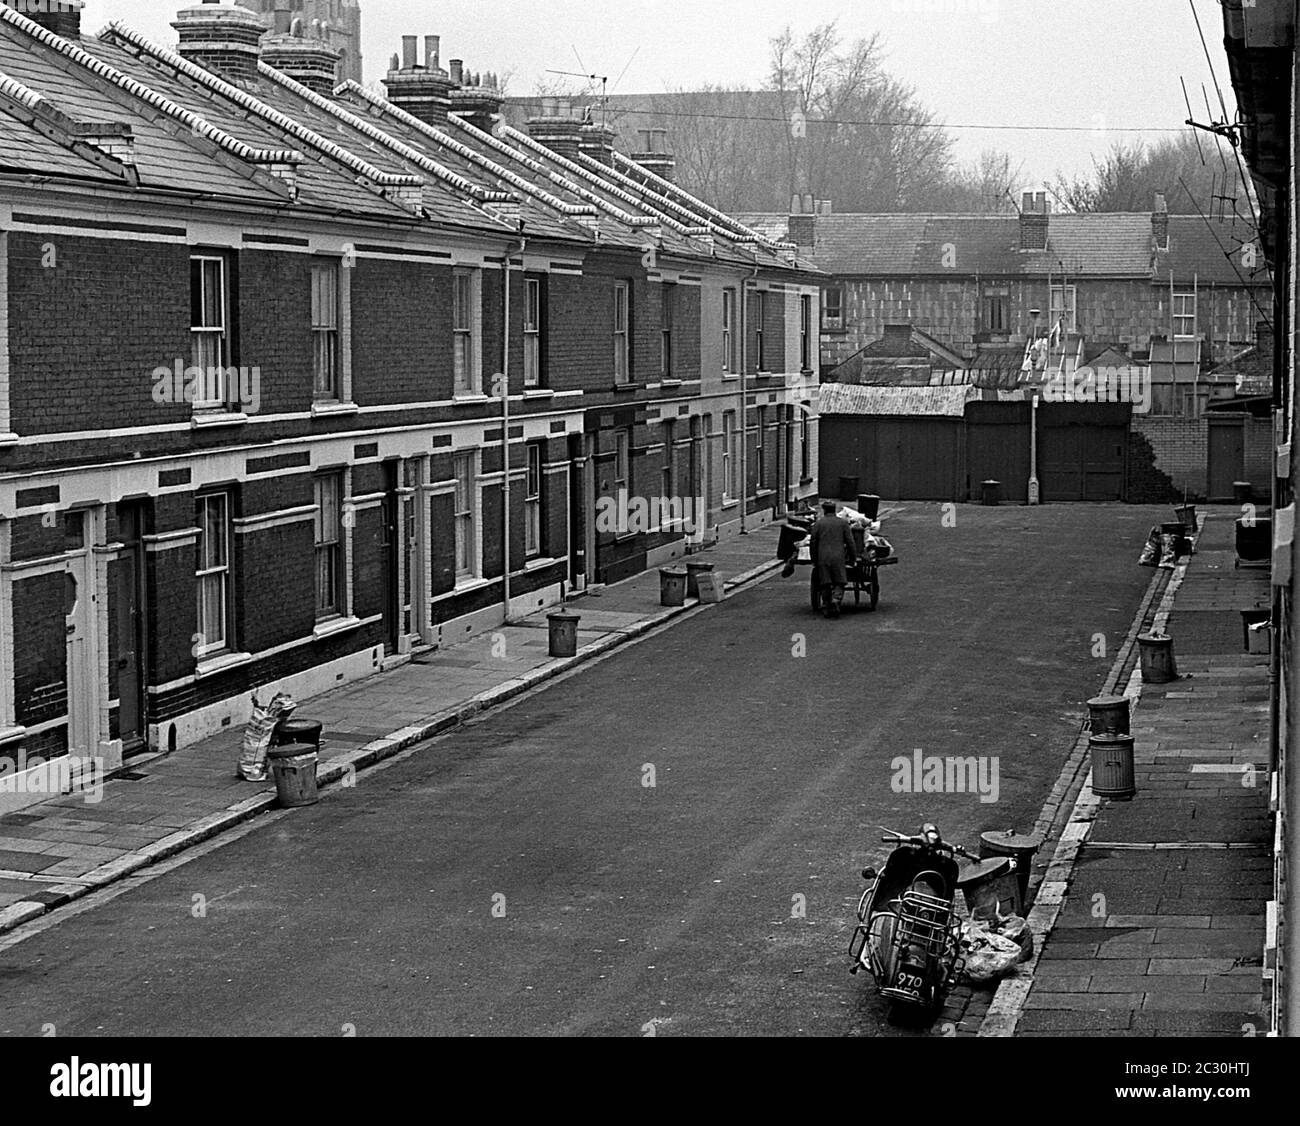 AJAXNETPHOTO. 20TH FBRUARY, 1968. PORTSMOUTH, ENGLAND. - FRATTON STREETS - A RAG N BONE MAN PUSHES HIS CART ALONG CARLESS ETHEL ROAD, A CUL-DE-SAC OFF CLIVE ROAD.PHOTO:JONATHAN EASTLAND/AJAX REF:3568133 0 23A Stock Photo